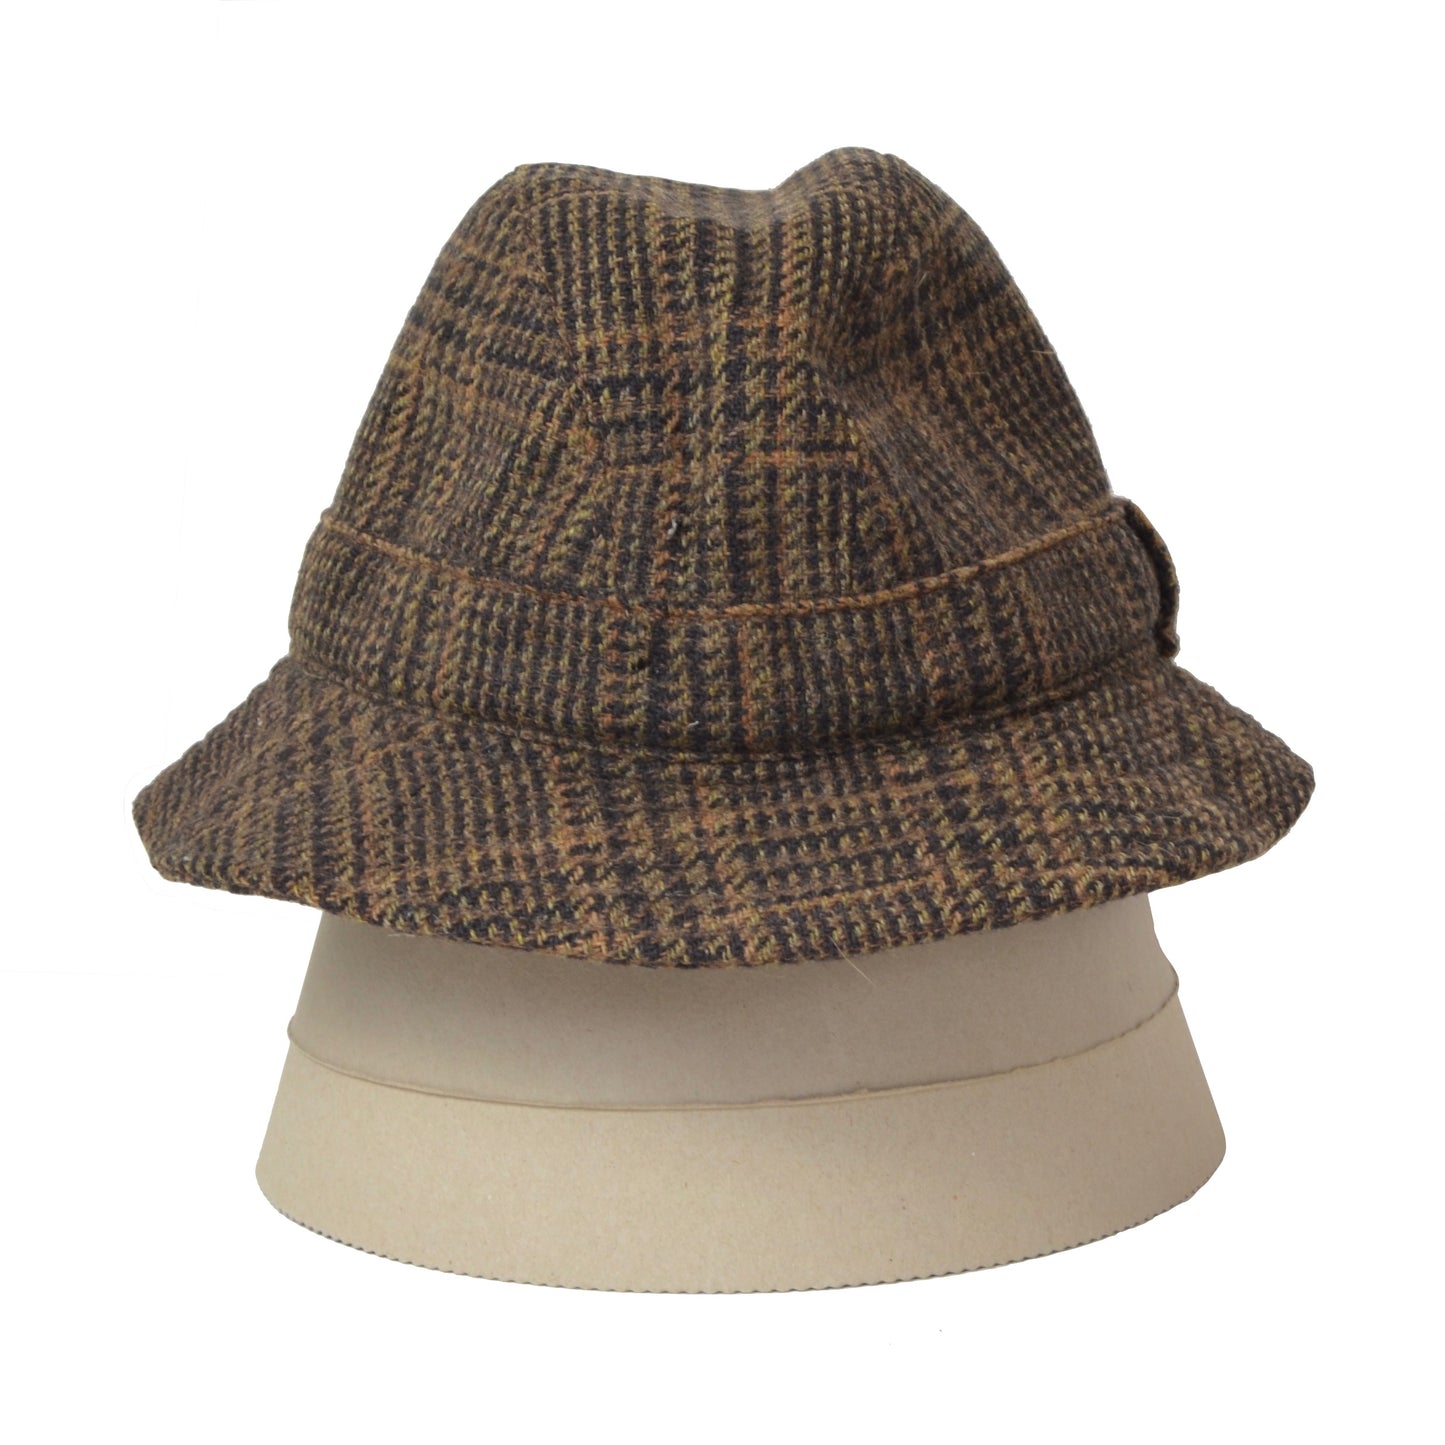 Lock & Co. London Tweed Bucket Hat Size 58 - Plaid